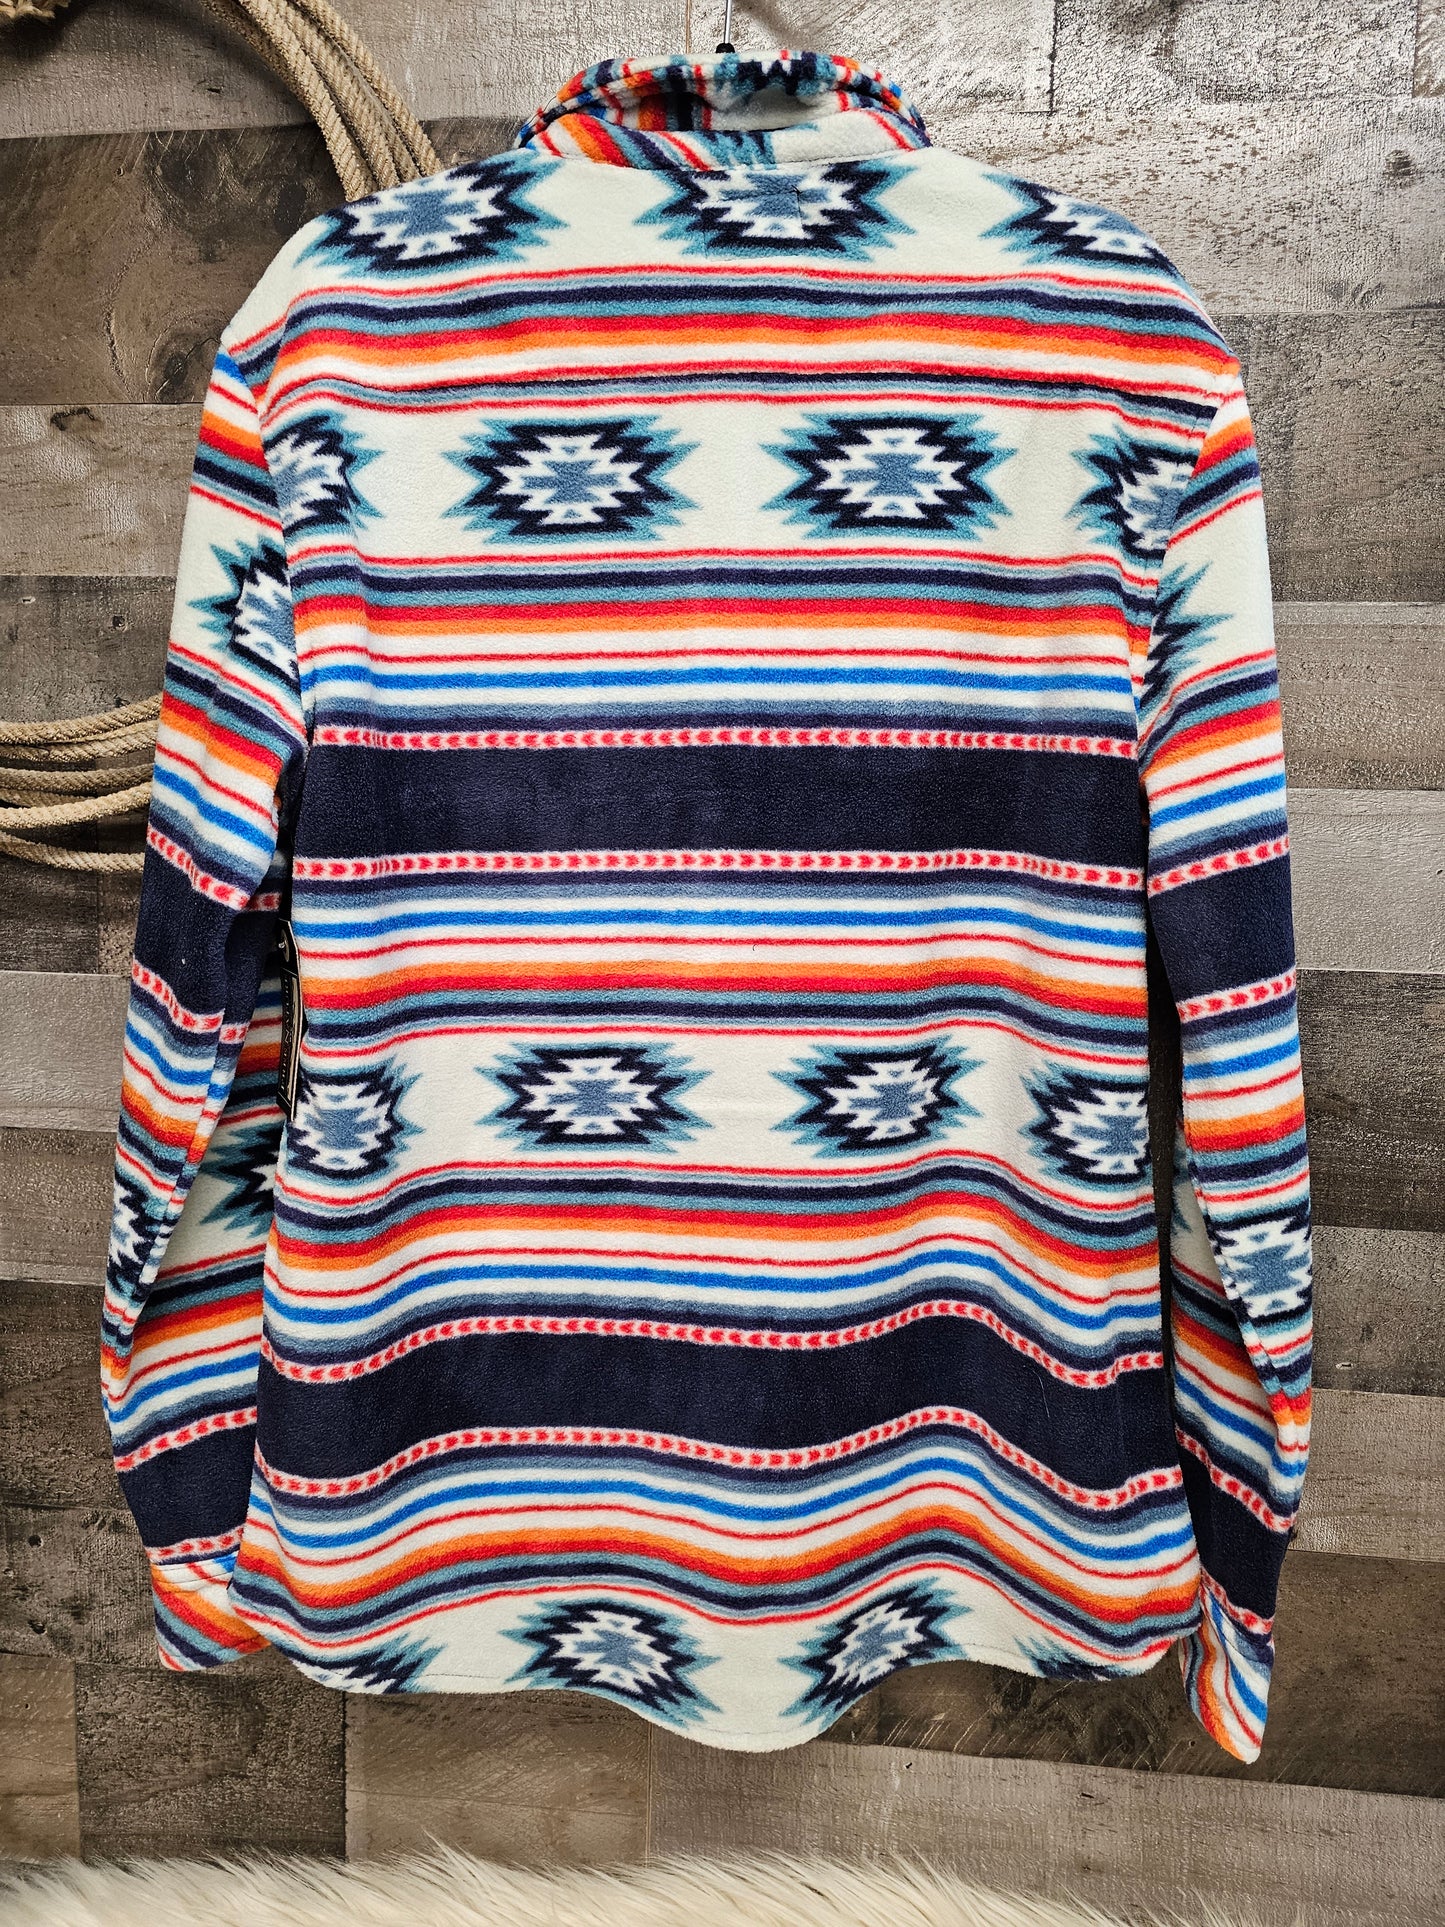 Steamboat Springs Unisex Aztec Fleece Button Up Shirt Shacket